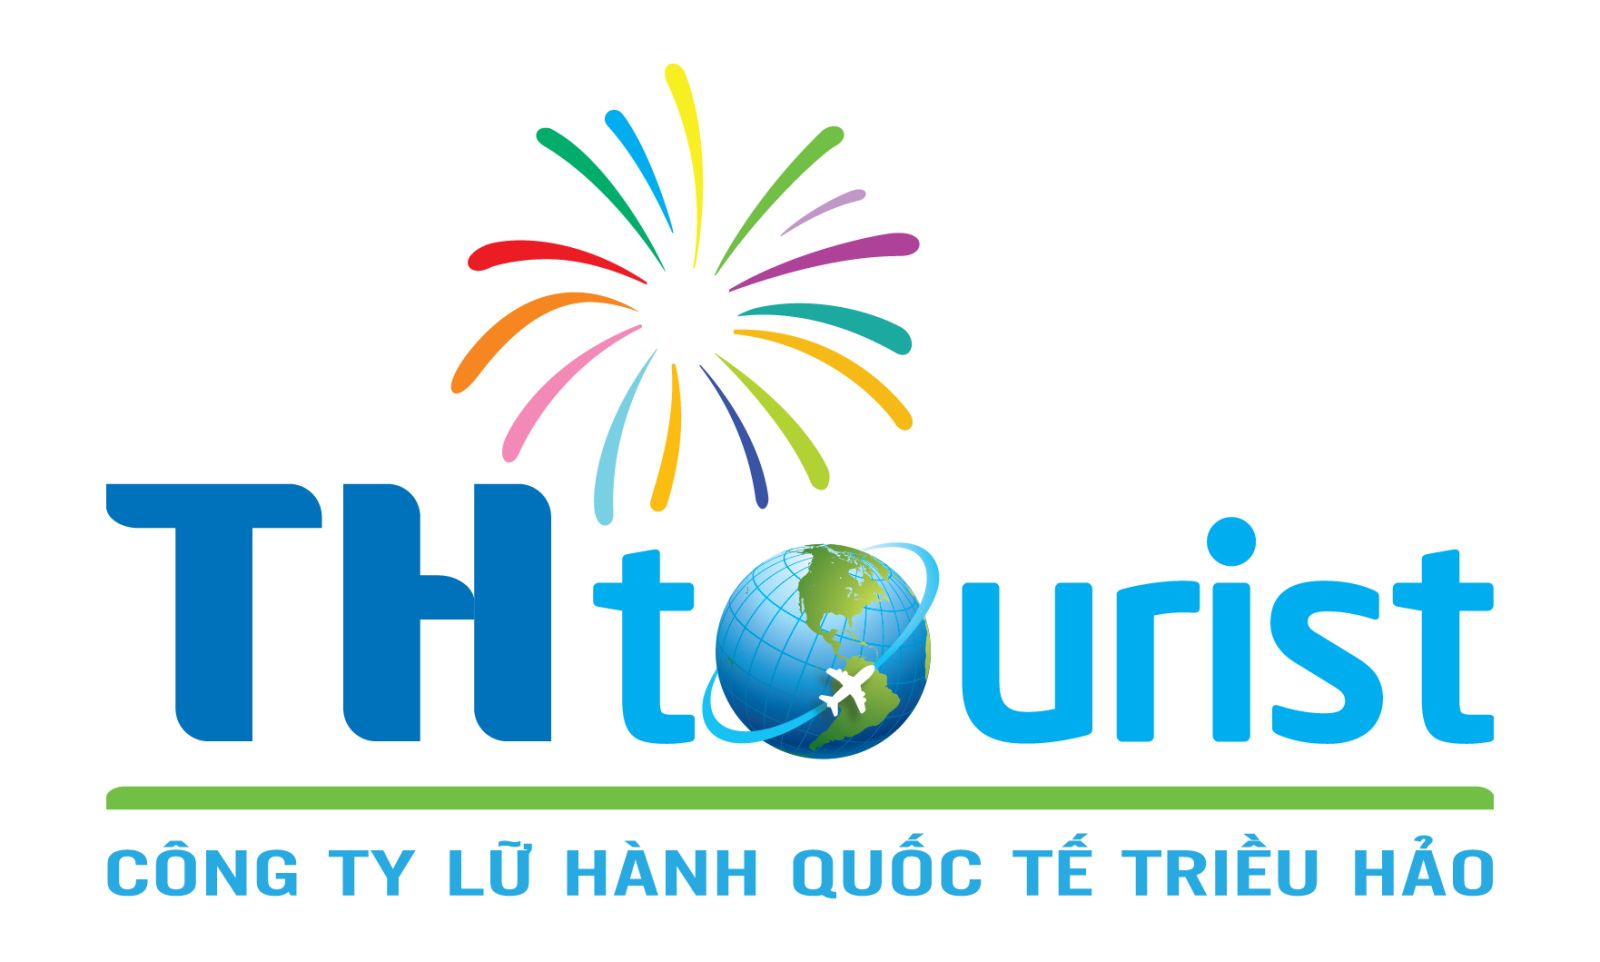 trieu hao tourist company limited photos